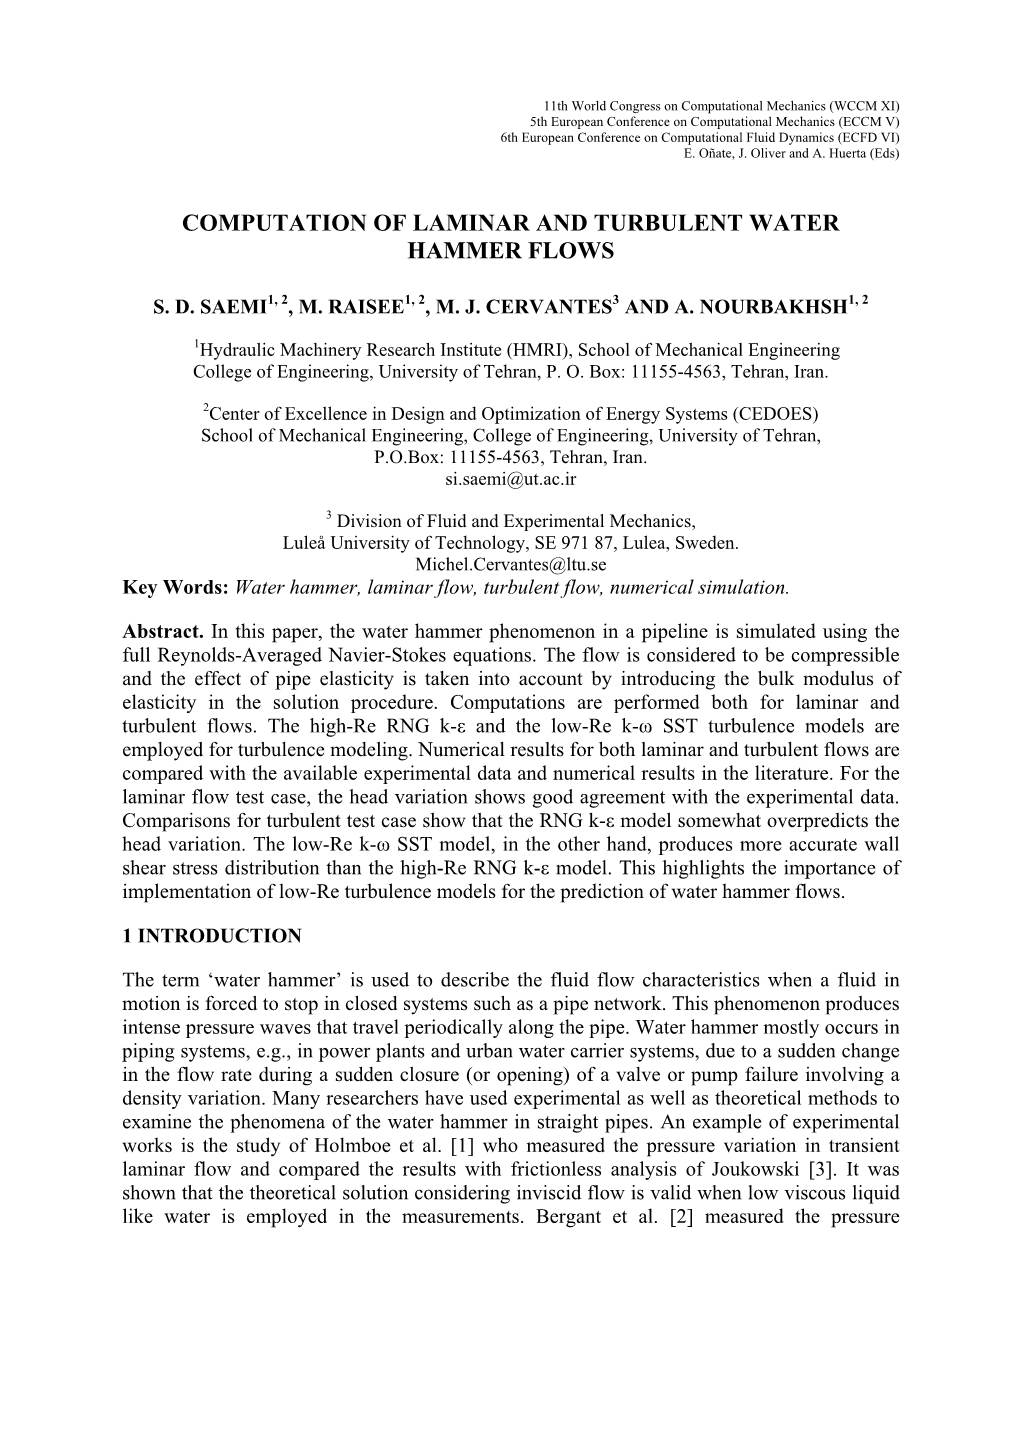 Computation of Laminar and Turbulent Water Hammer Flows